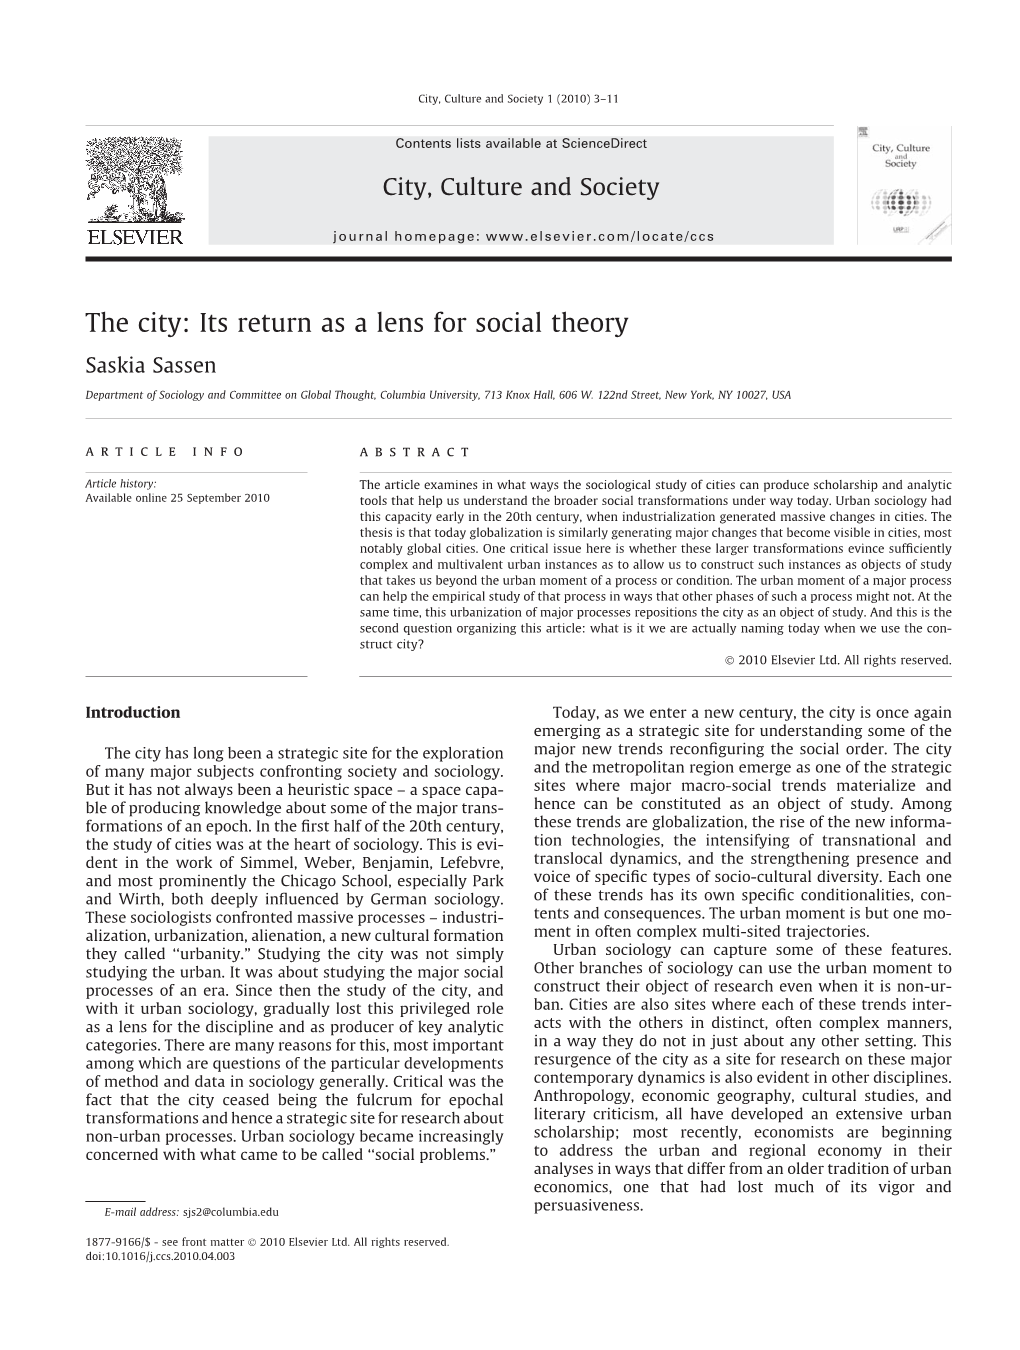 The City: Its Return As a Lens for Social Theory Saskia Sassen